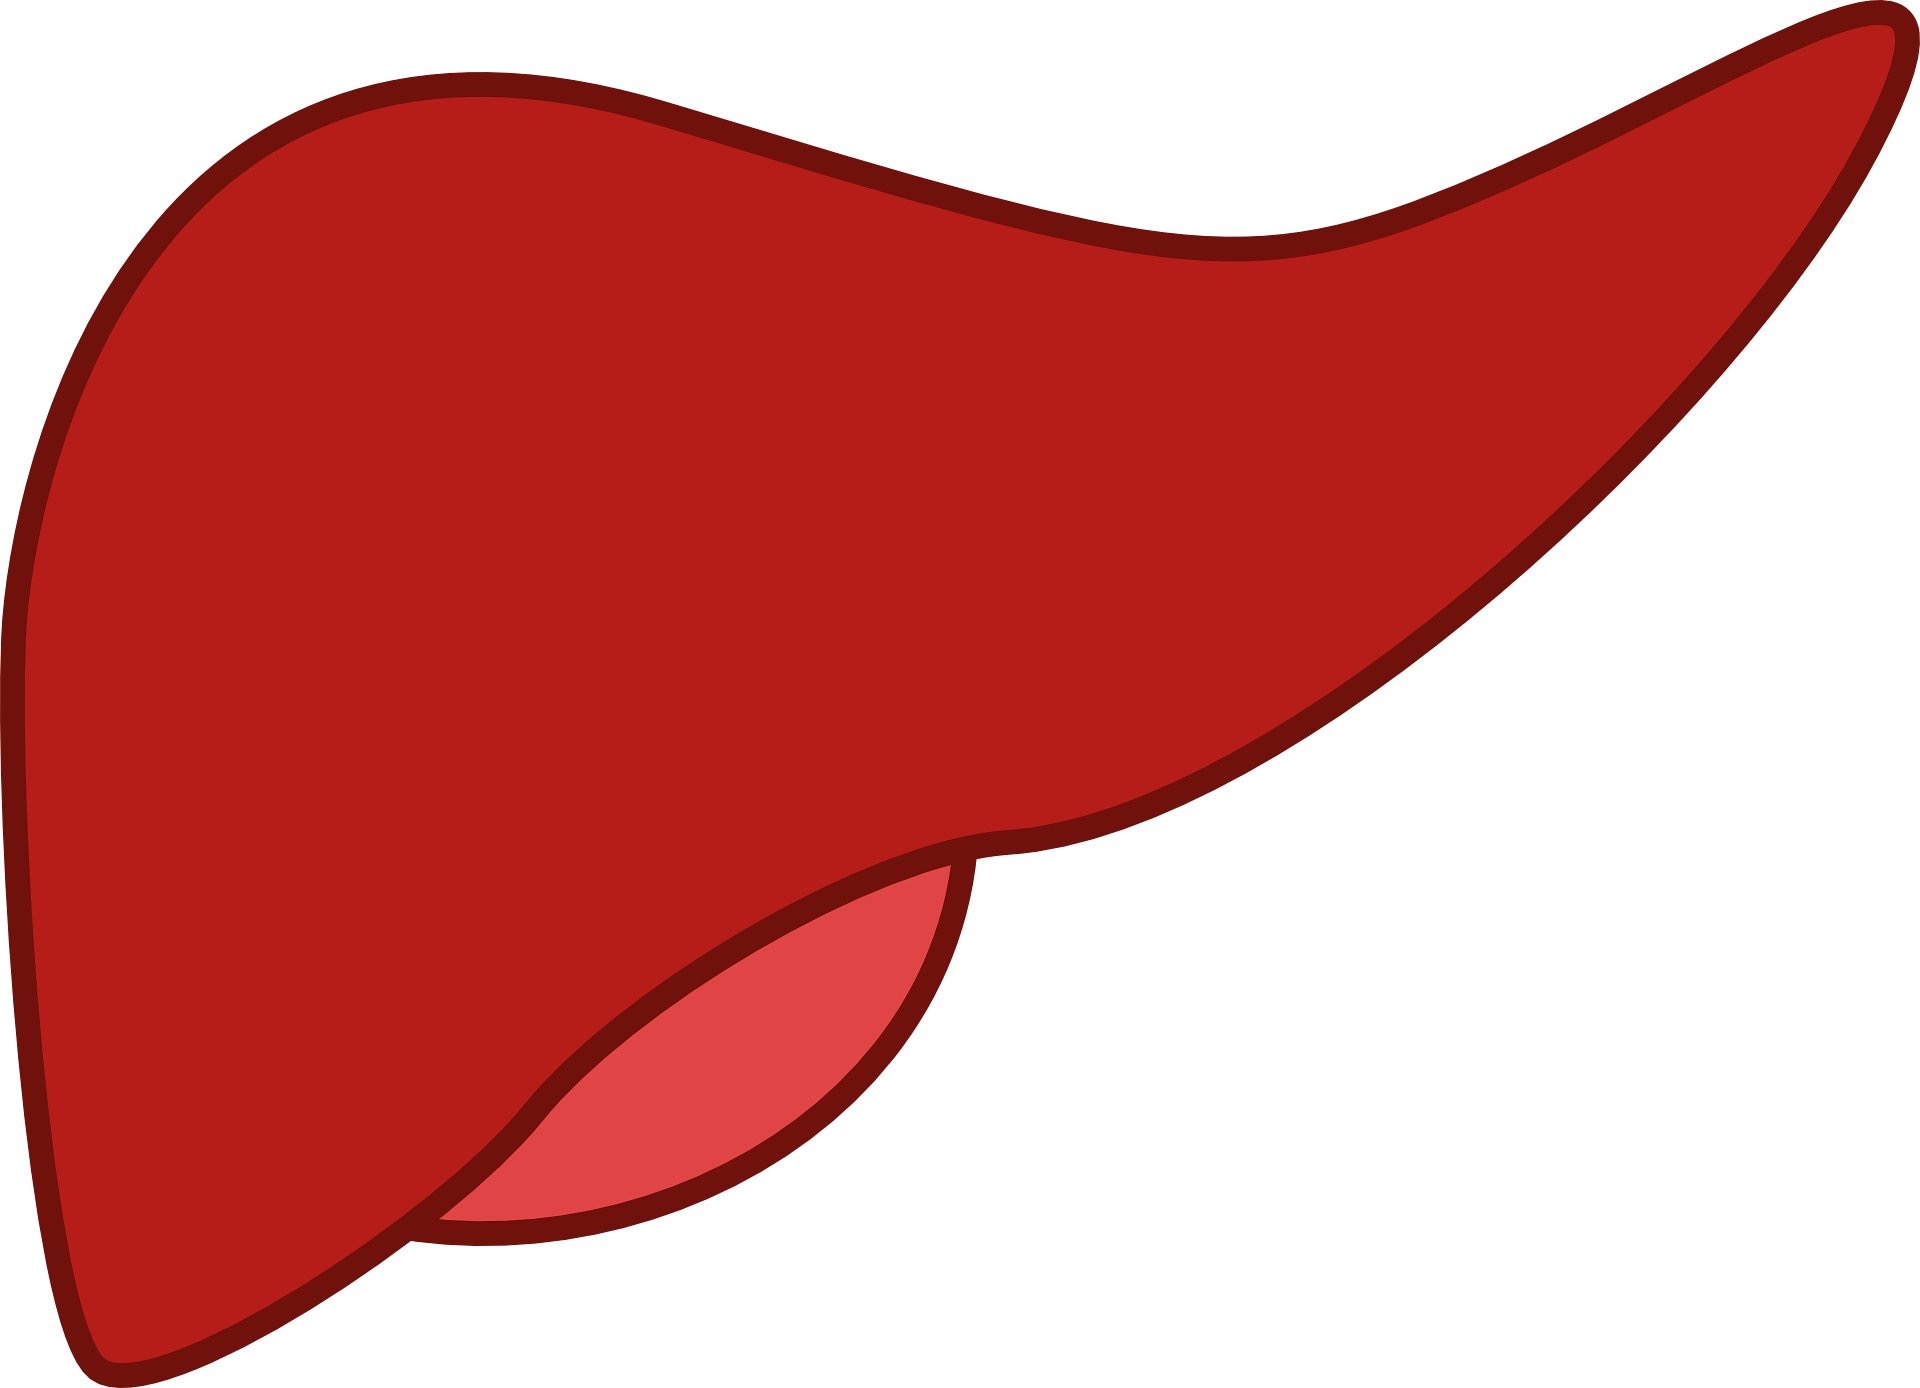 【Science背靠背】肝移植等待不再绝望！剑桥科学家利用胆管类器官，成功修复受损肝脏